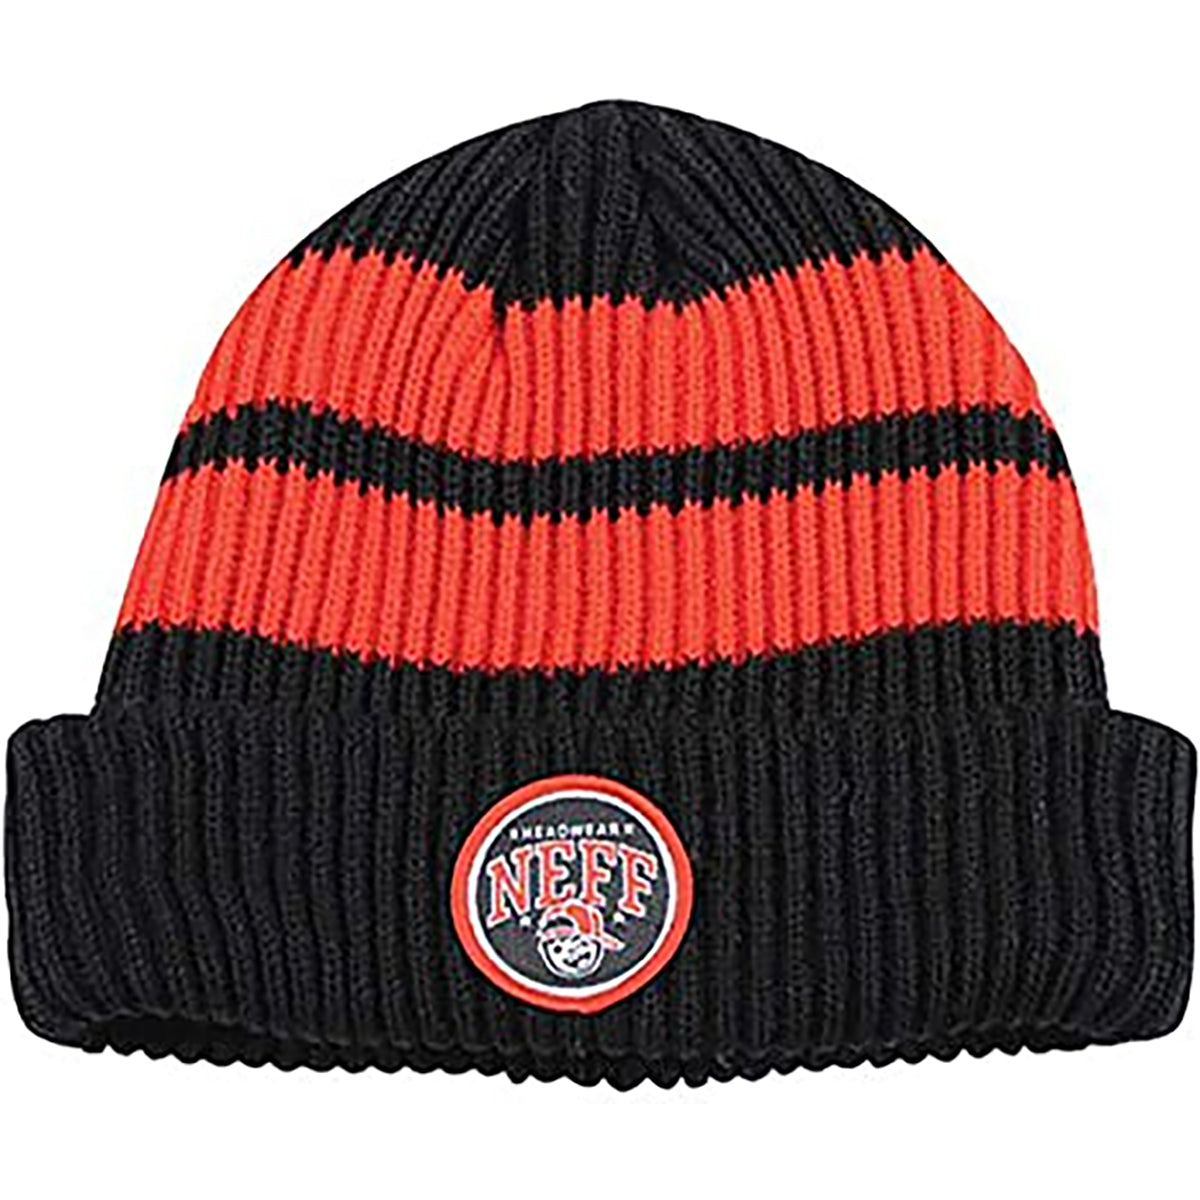 Neff Coach Men's Beanie Hats - Black